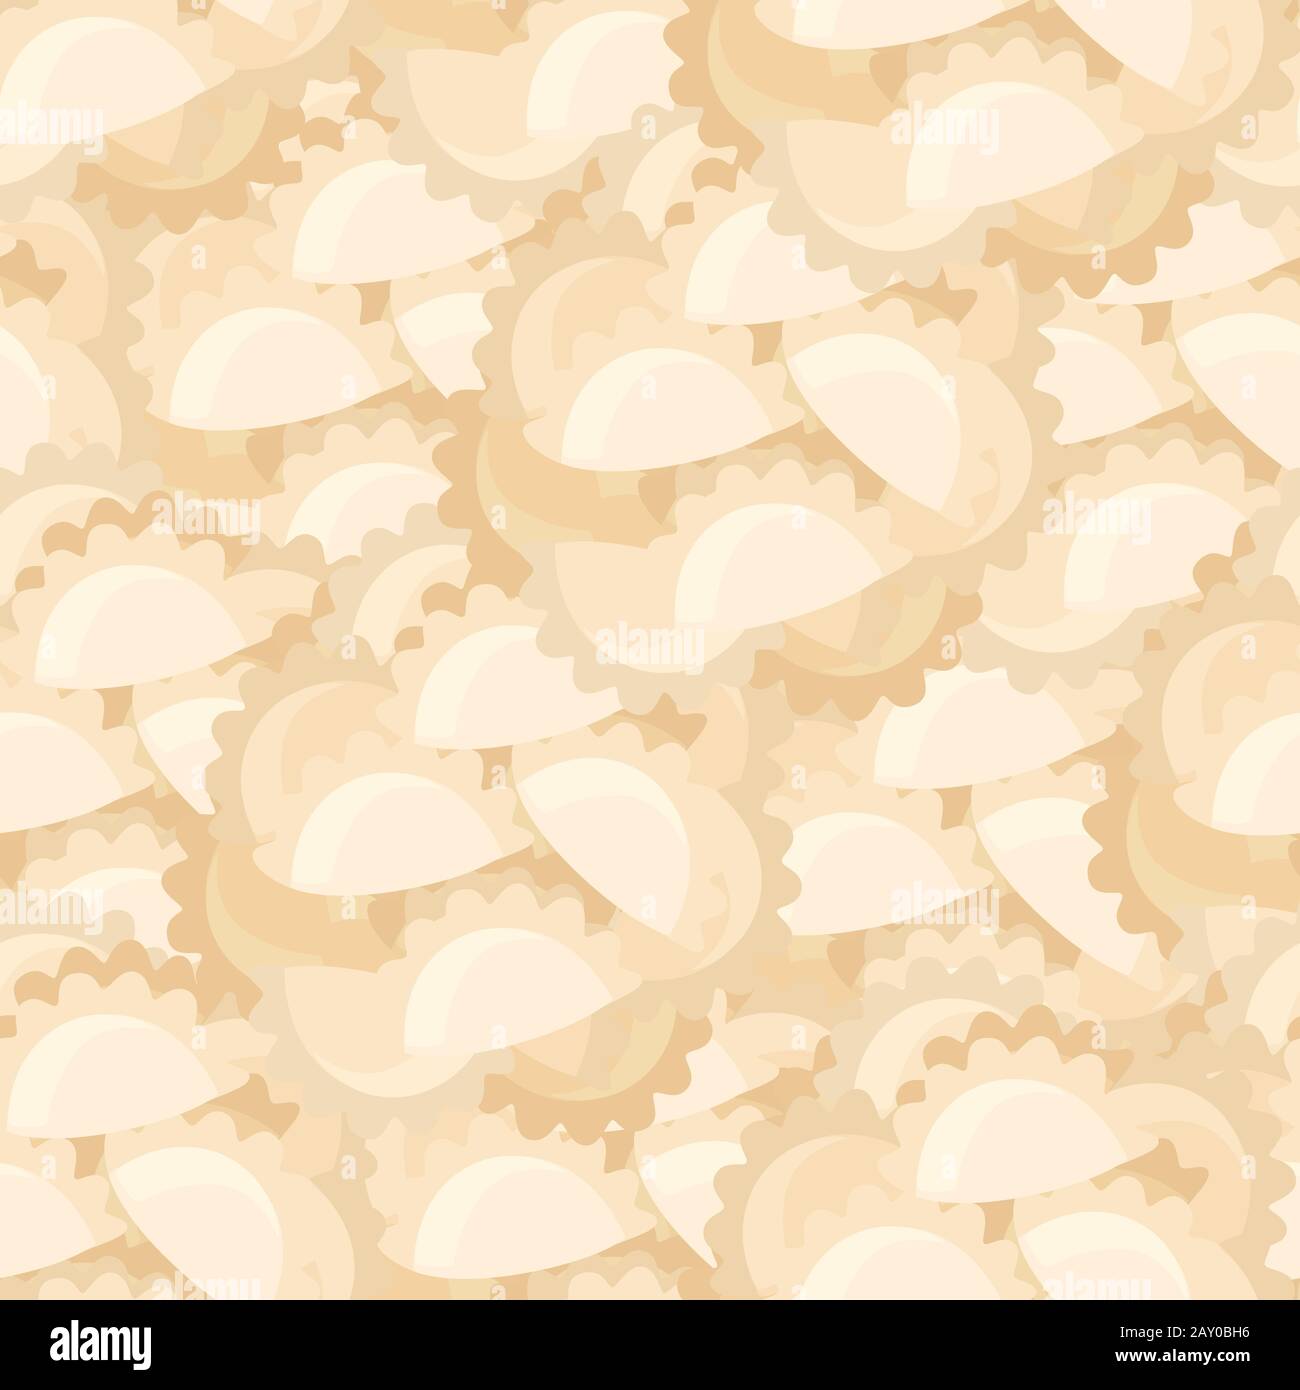 Seamless pattern of traditional slav food dishes dumplings varenyky pelmeni flat vector illustration. Stock Vector